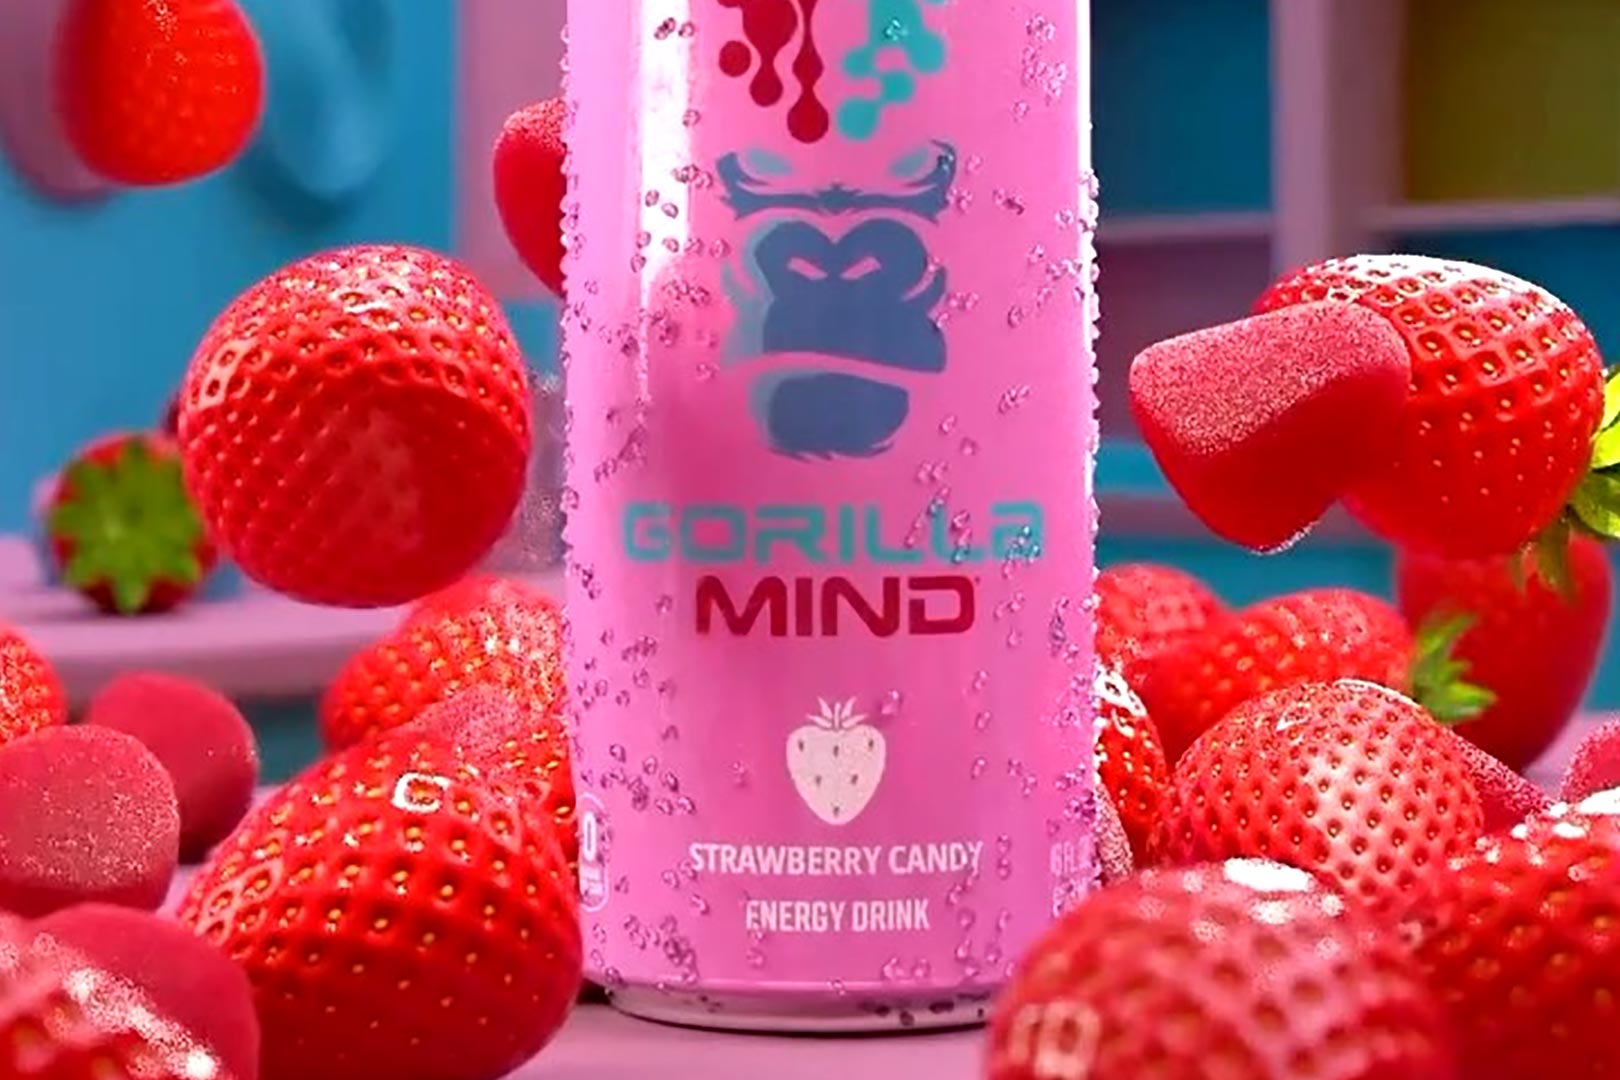 Strawberry Candy Gorilla Mind Energy